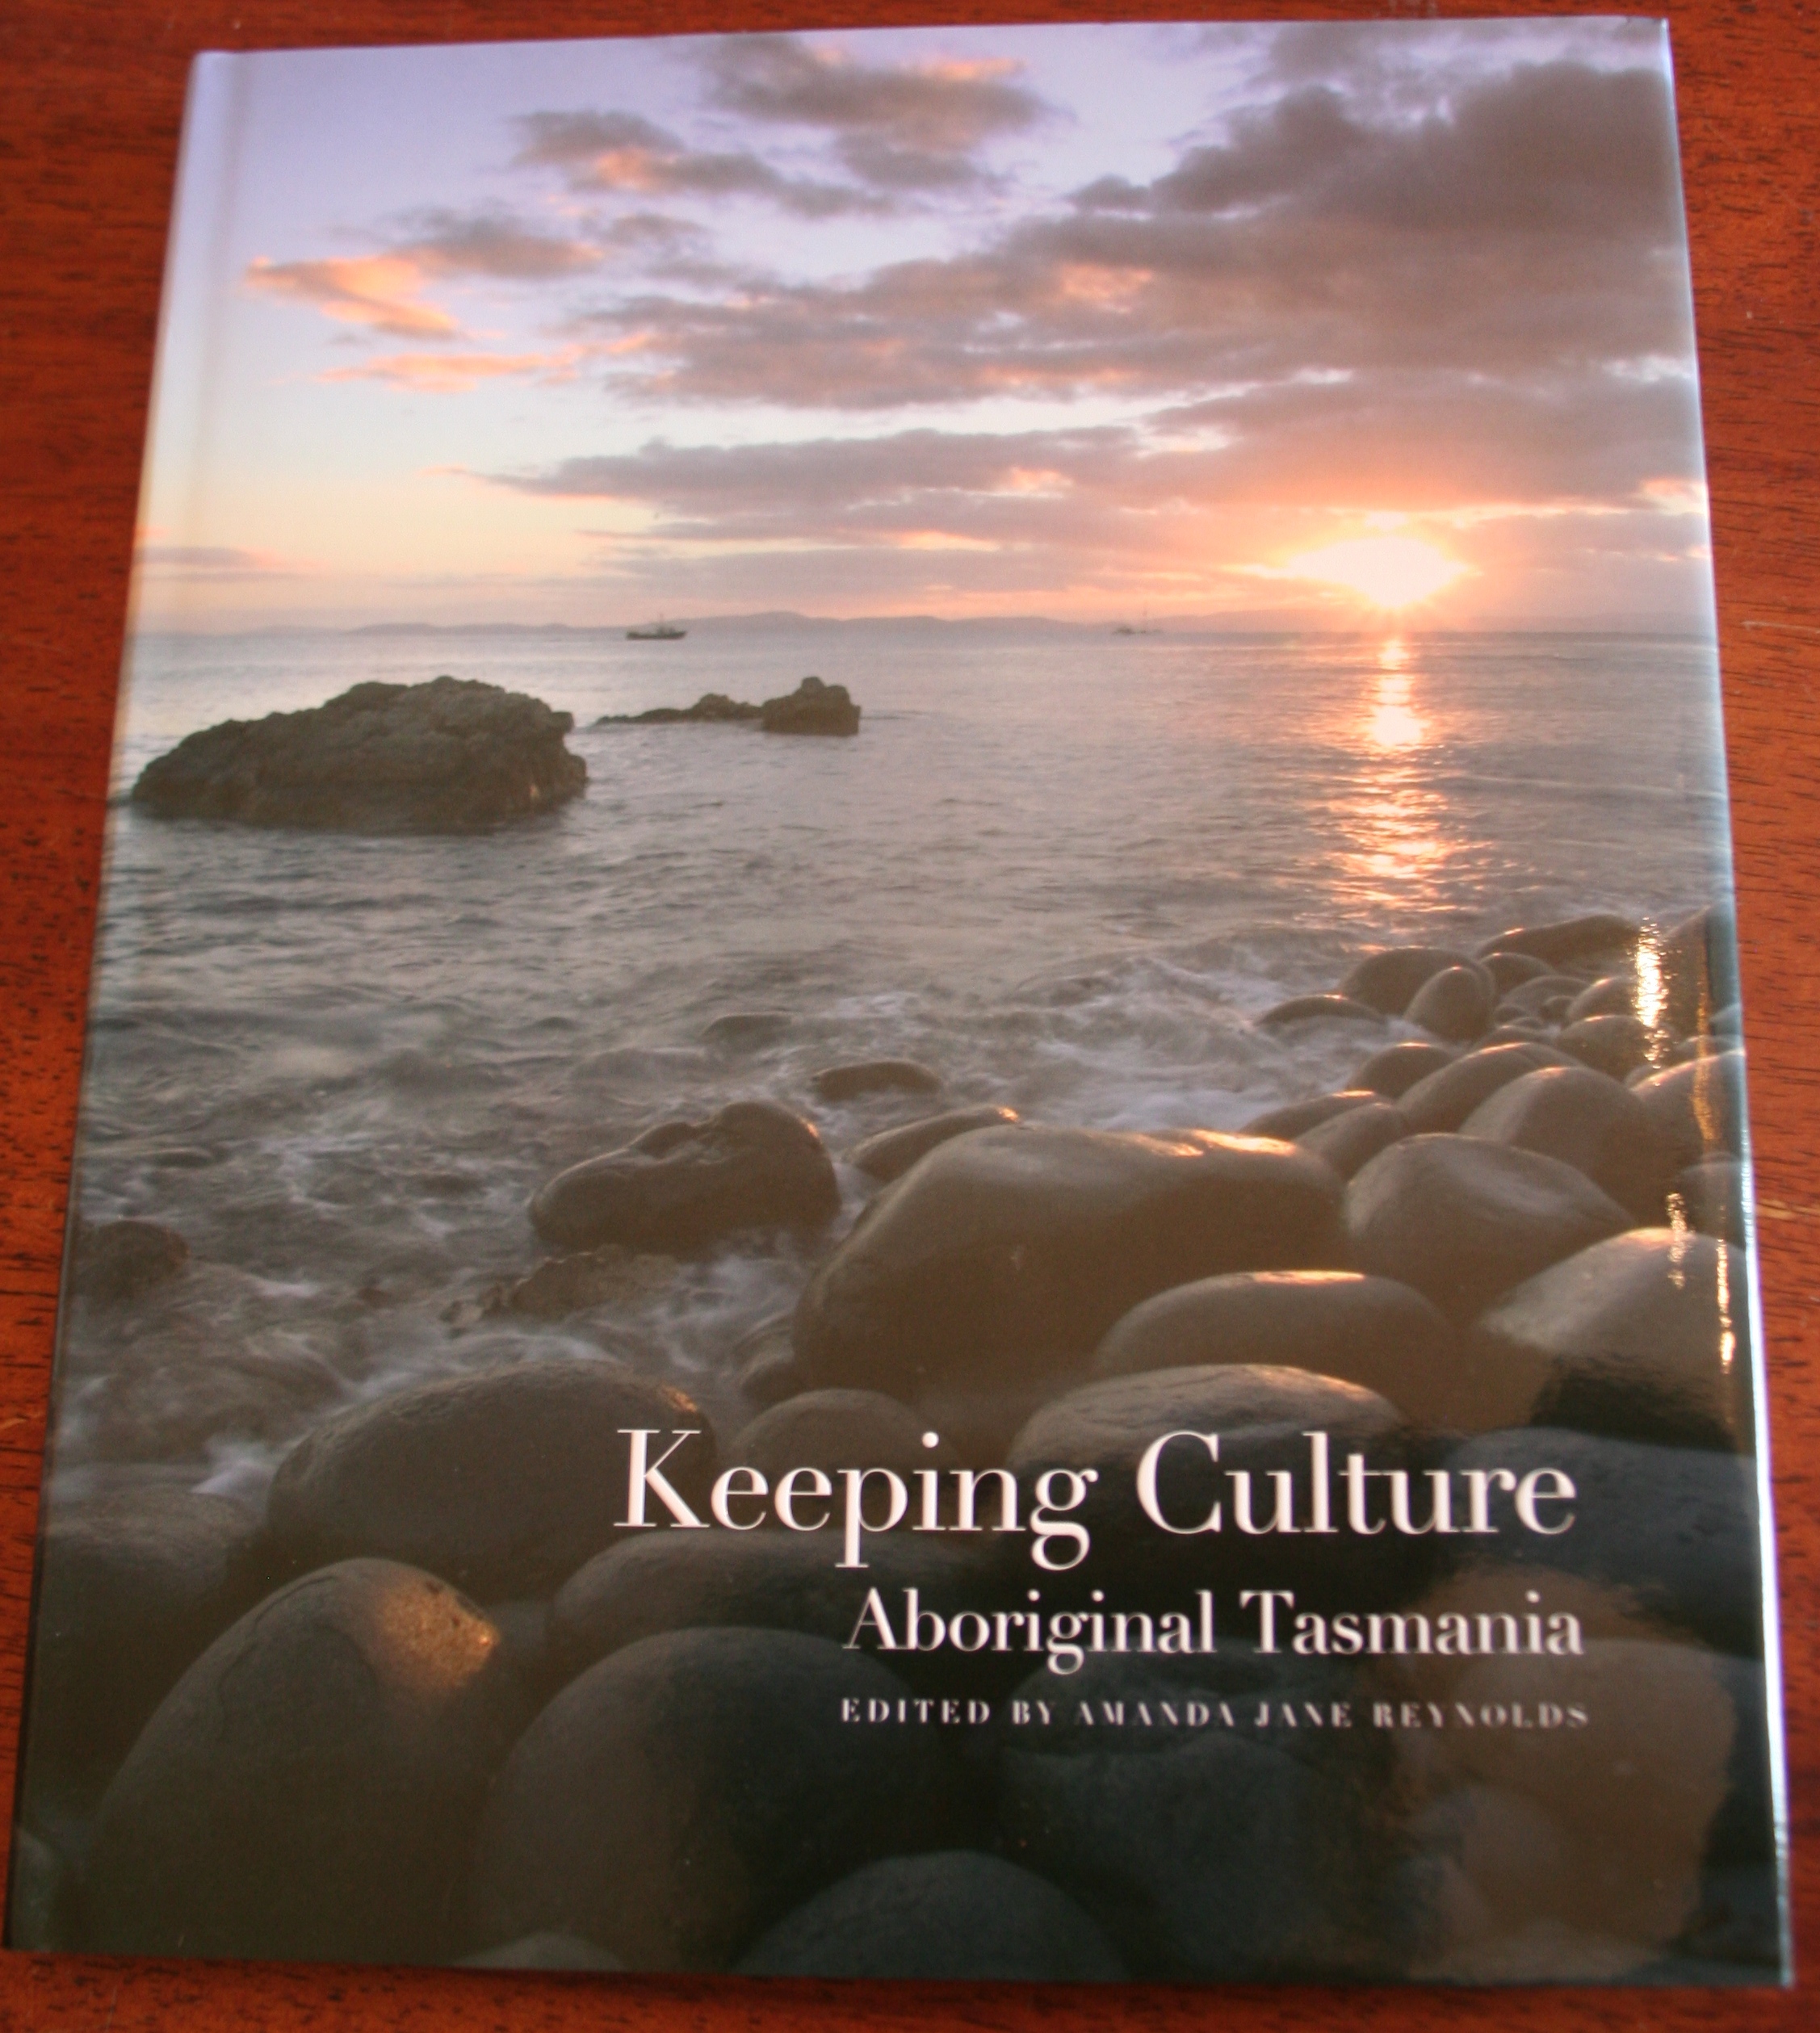 Keeping Culture - Aboriginal Tasmania